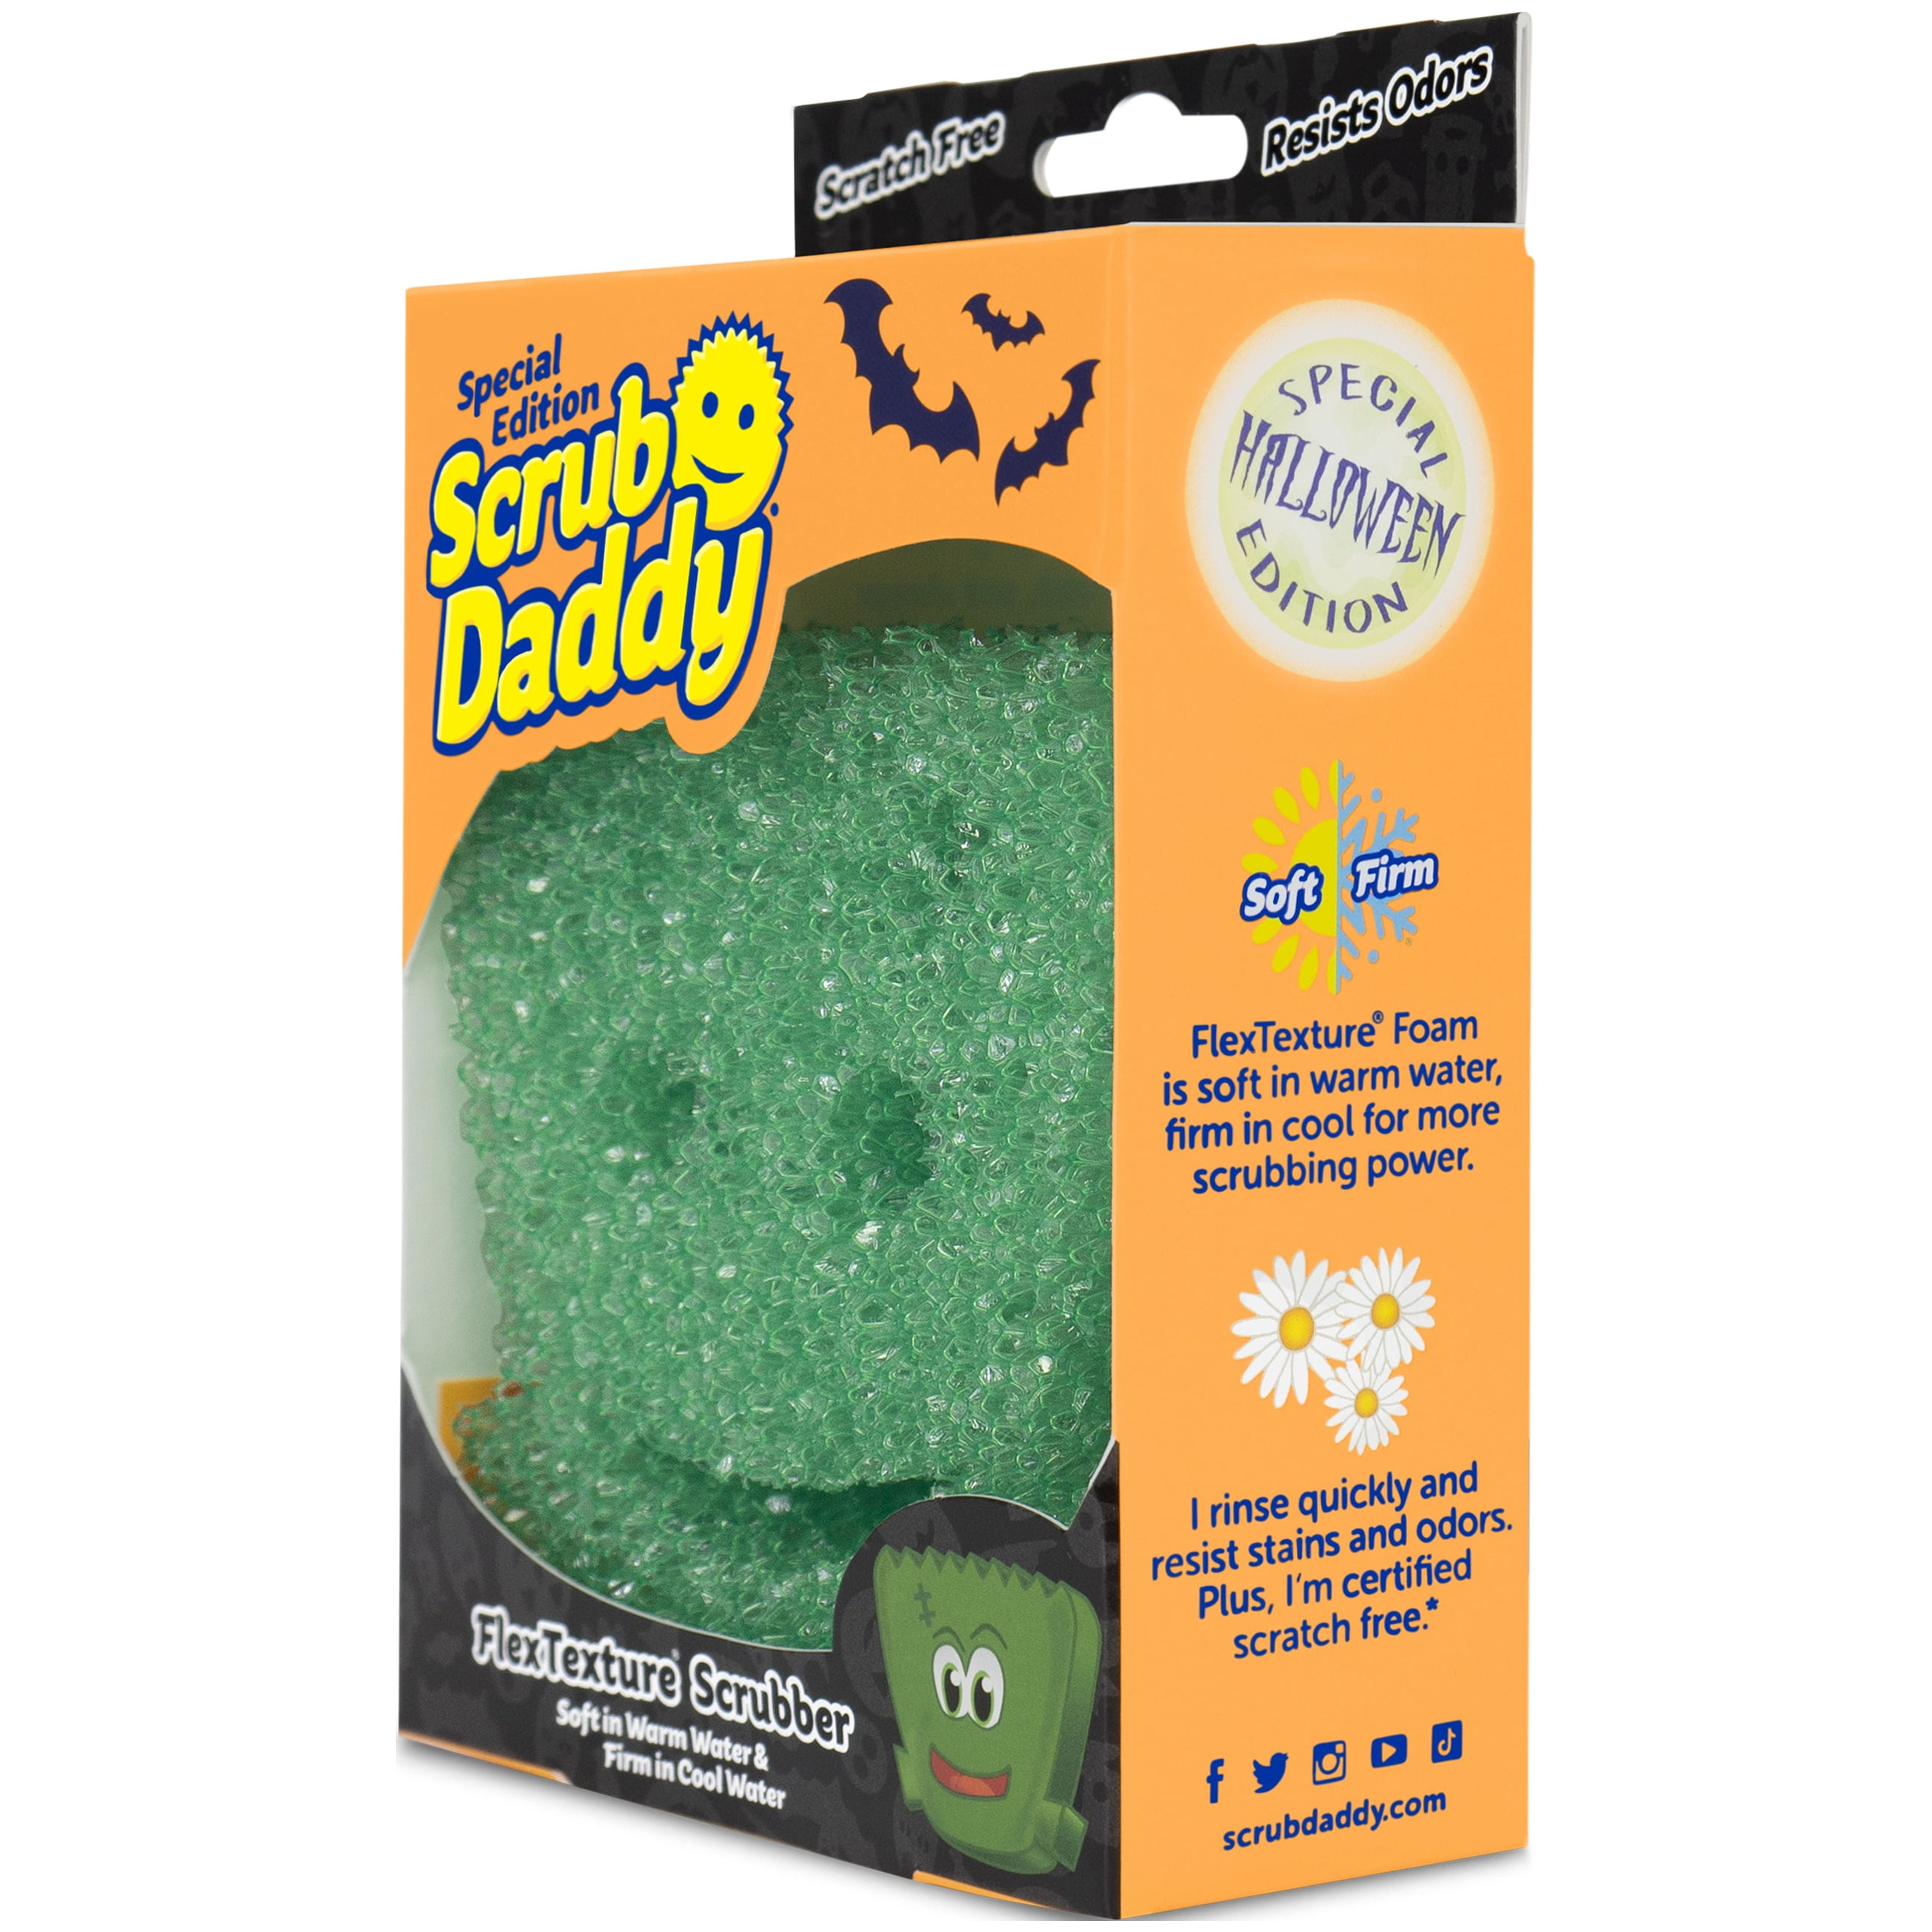 Scrub Daddy, Other, Set Of Scrub Daddy Soap Daddy Dispenser Halloween  Spooky Scrubbers